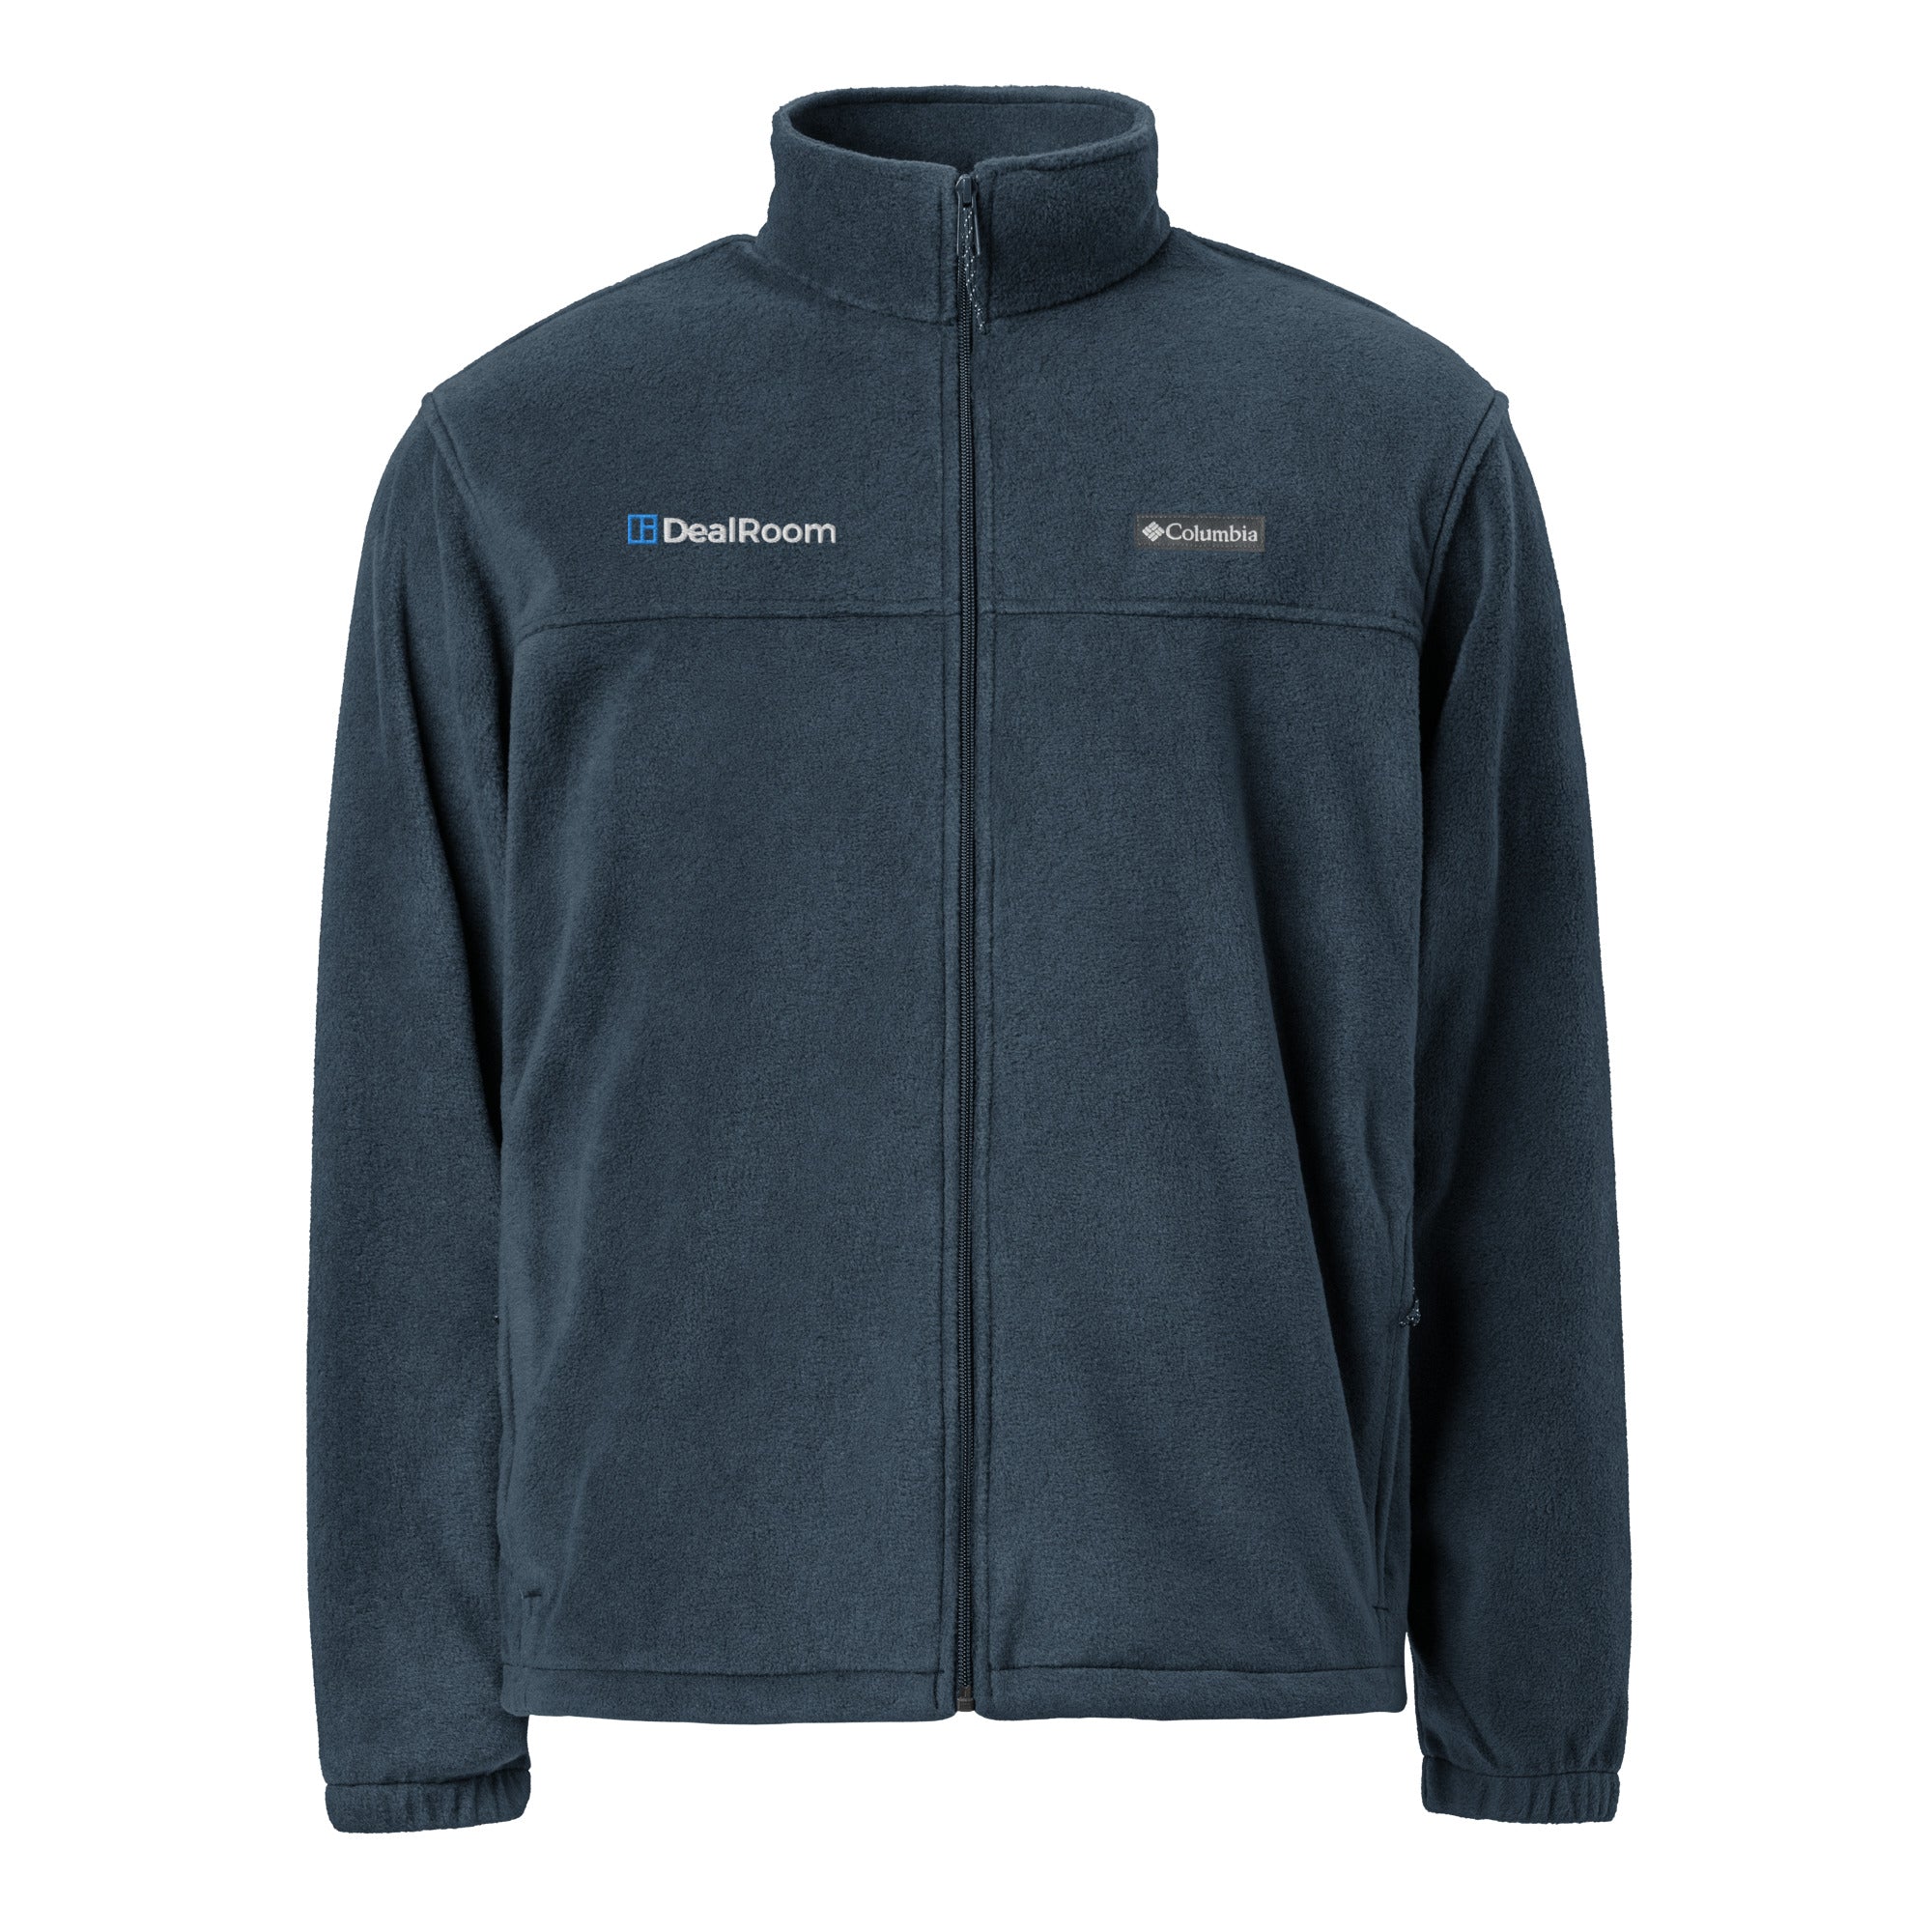 DealRoom Unisex Columbia fleece jacket